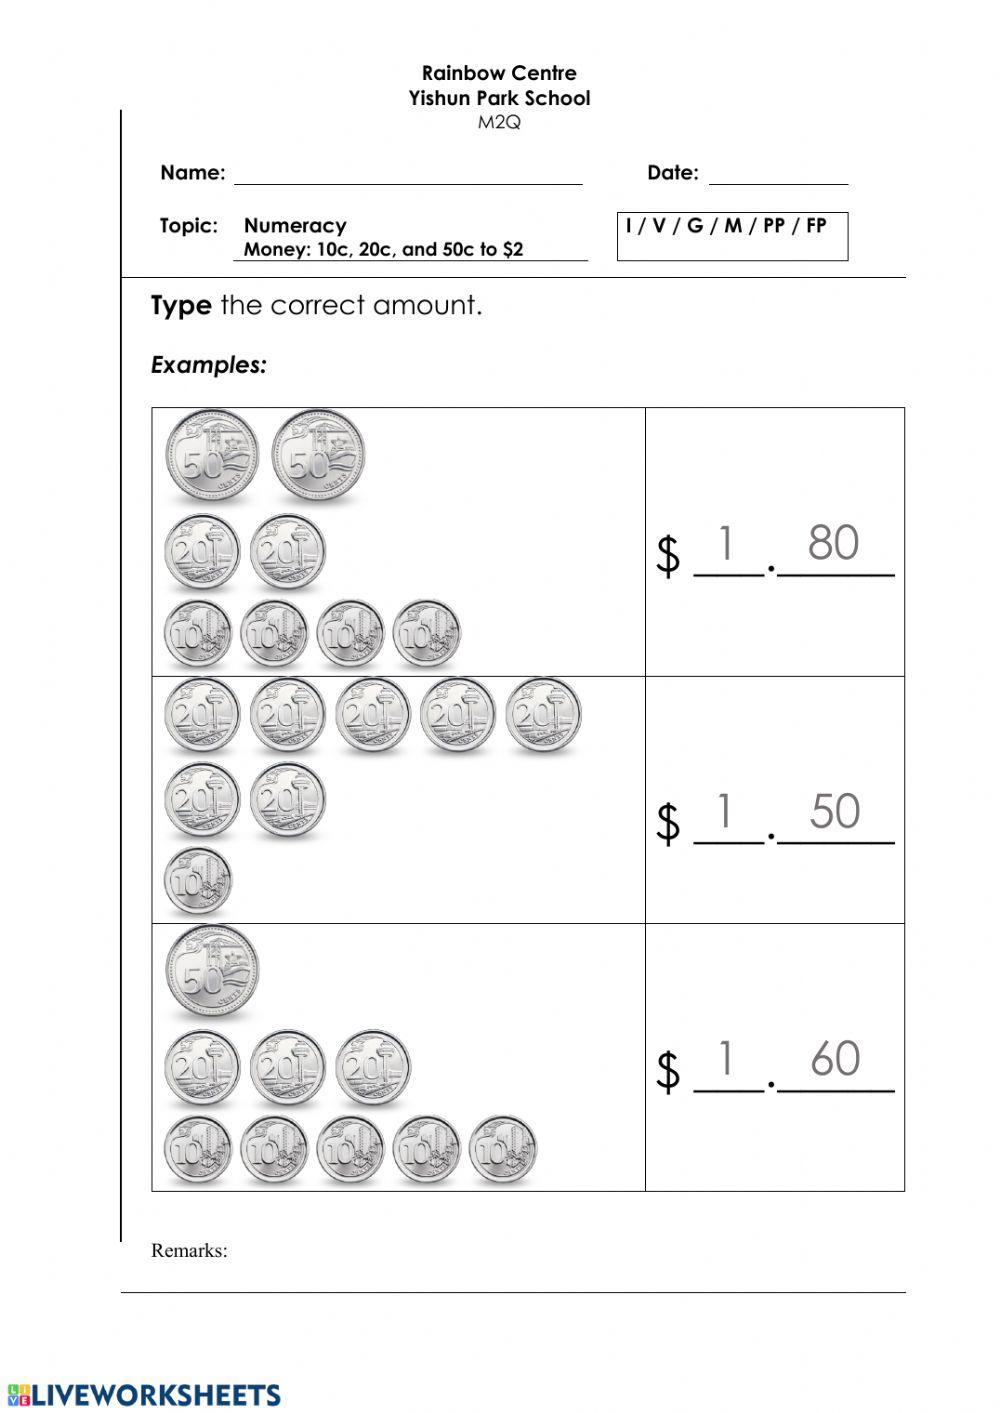 Money Type Worksheet - 10c, 20c, and 50c to -2 R